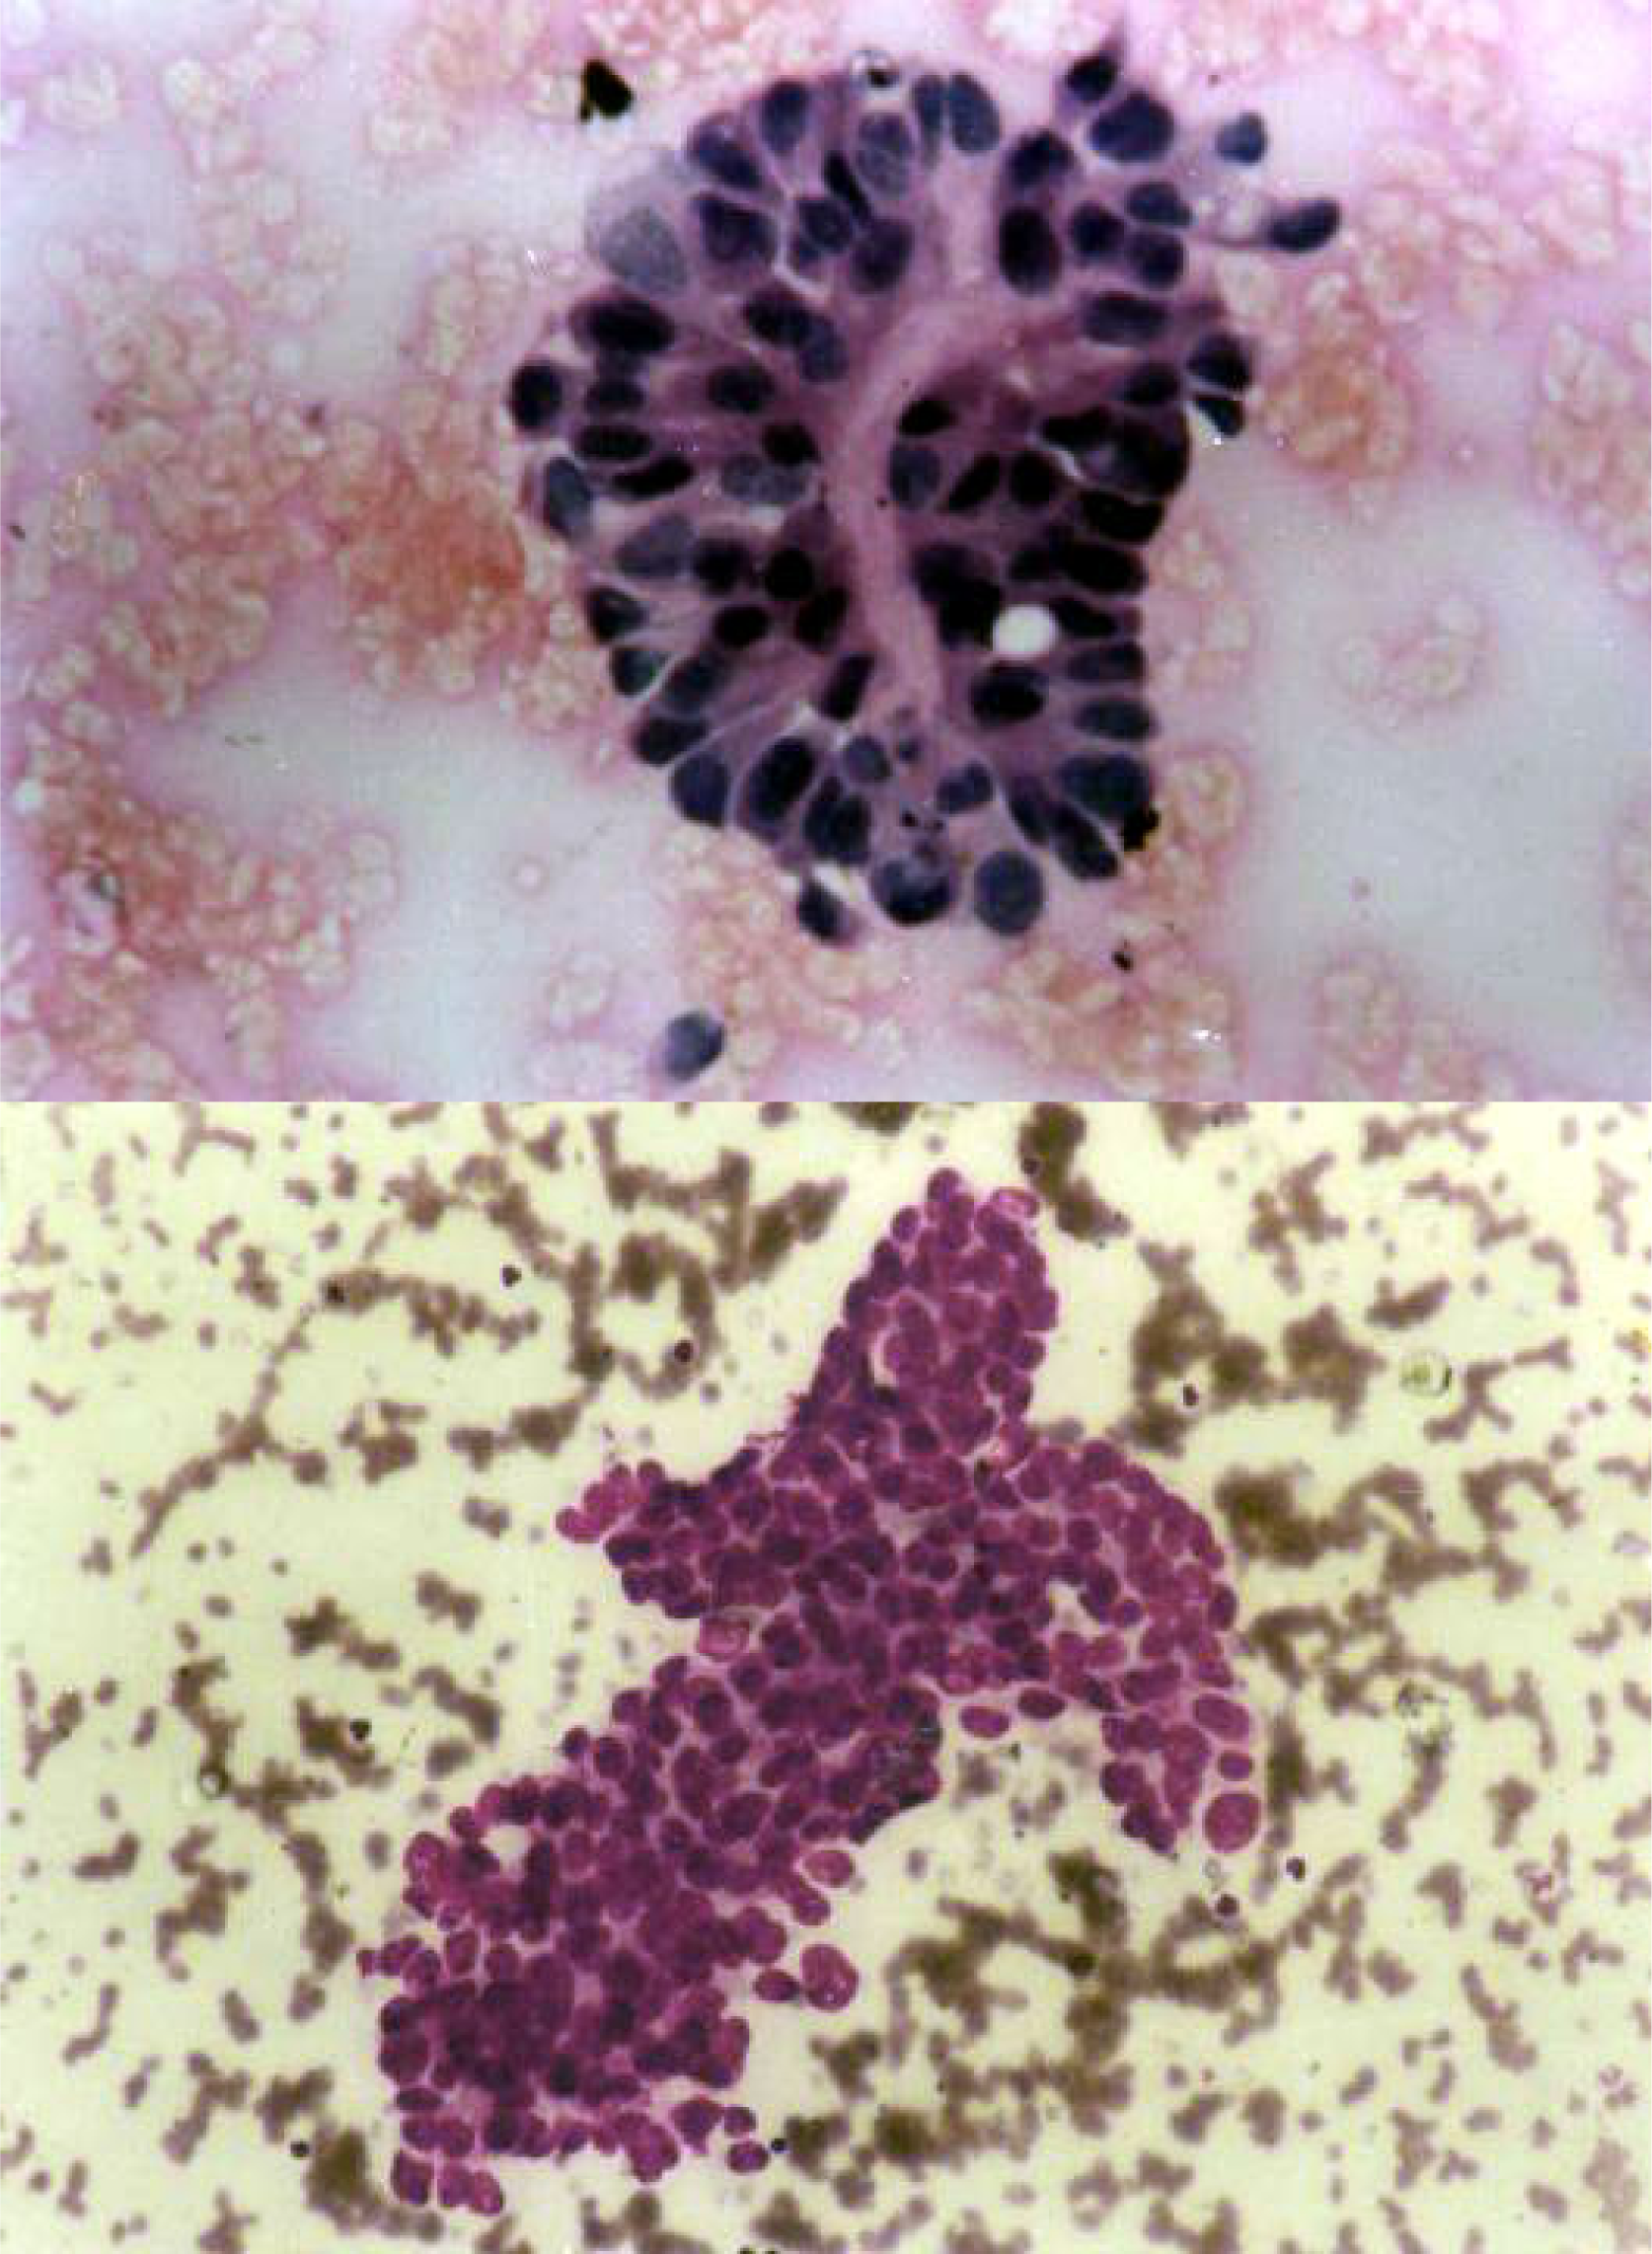 1. Metastatic adenocarcinoma: Tumors cell arranged in a glandular pattern [MGG ×400]. 2. Metastatic adenocarcinoma: Tumors cell arranged in an acinar pattern. [MGG ×400].